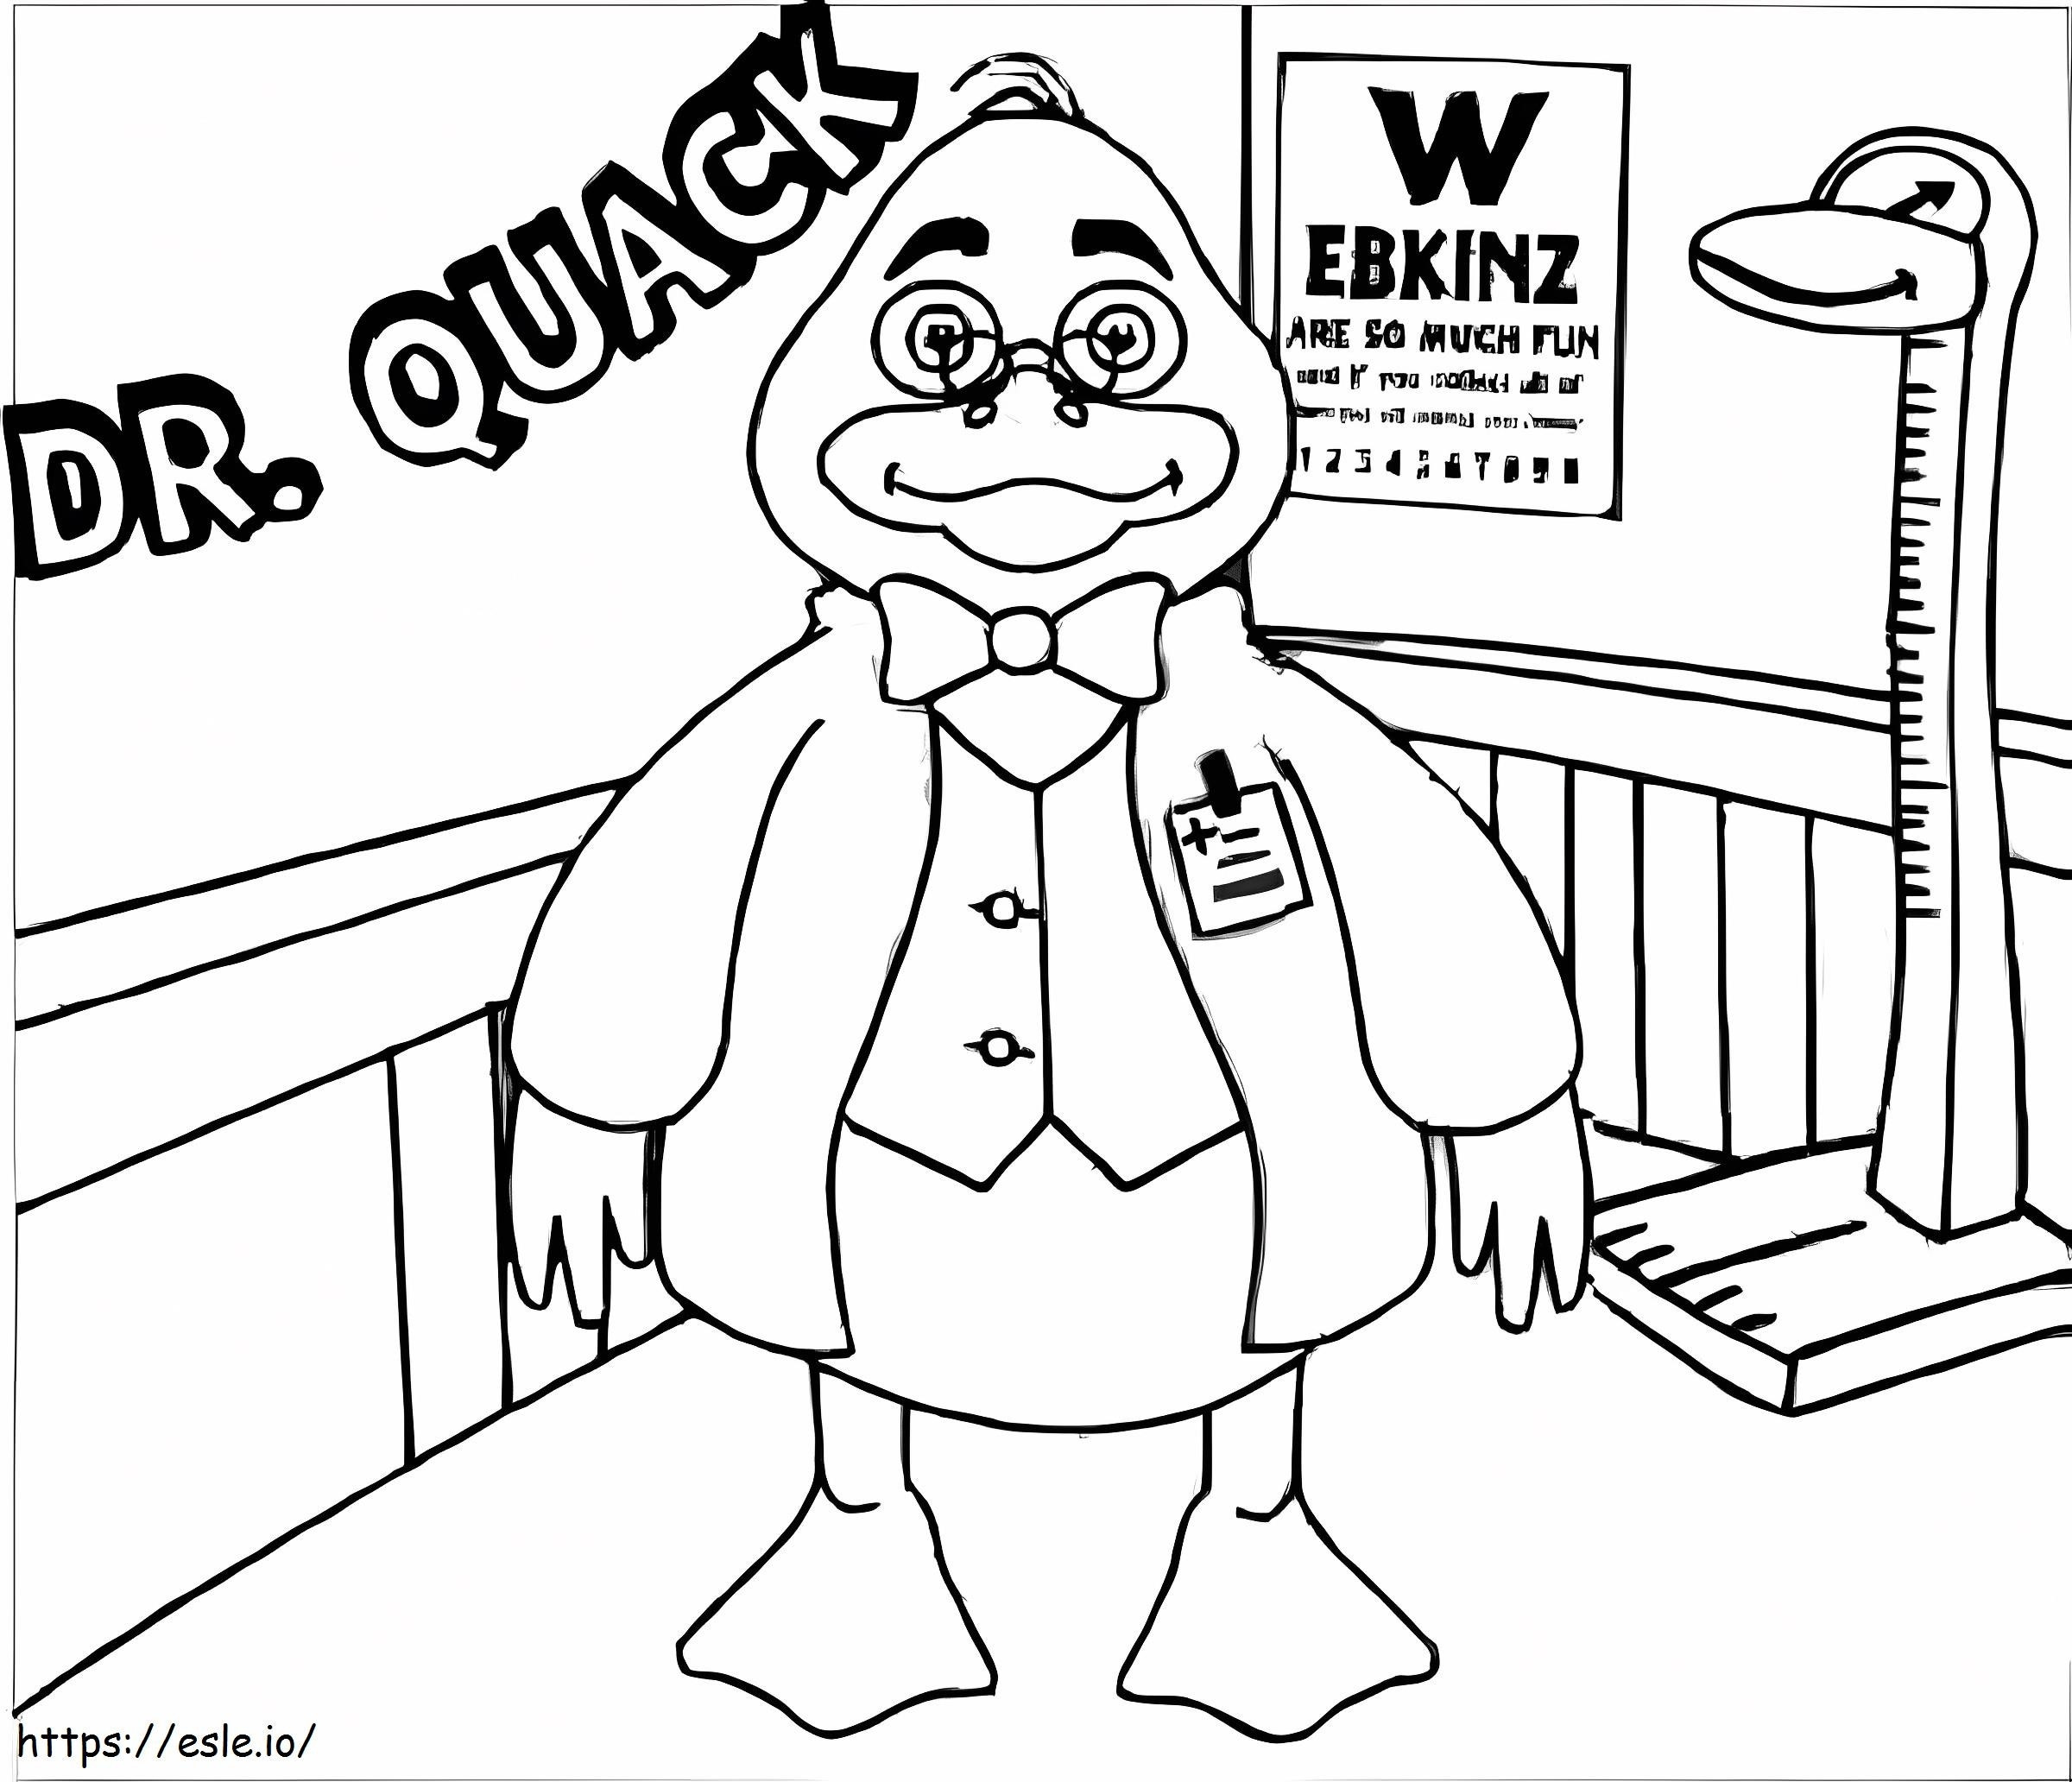 Doktor Quack Webkinz kolorowanka